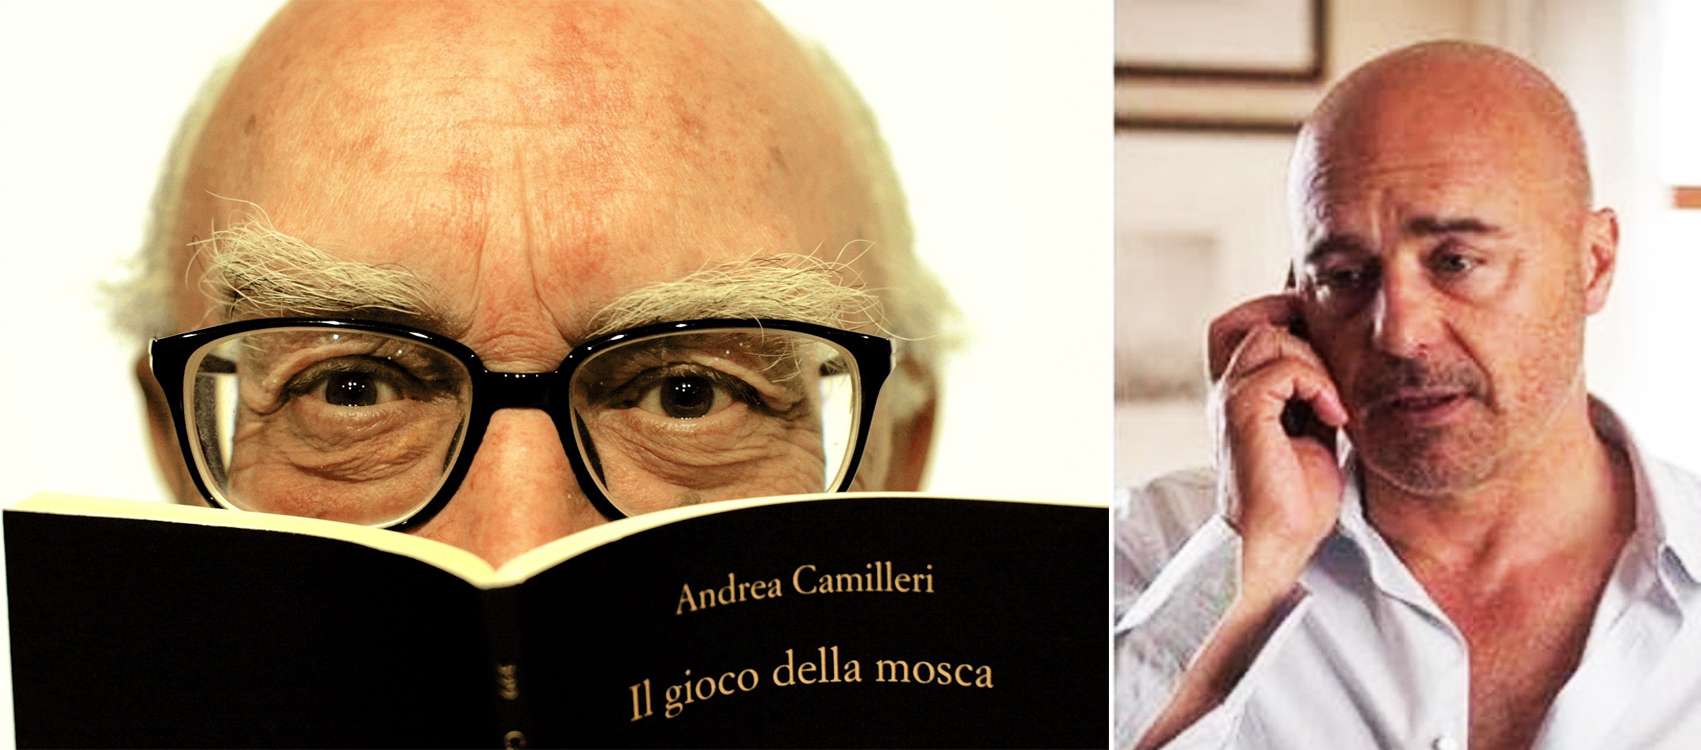 Andrea Camilleri η προσωποποίηση της αναζήτησης και της αμφιβολίας